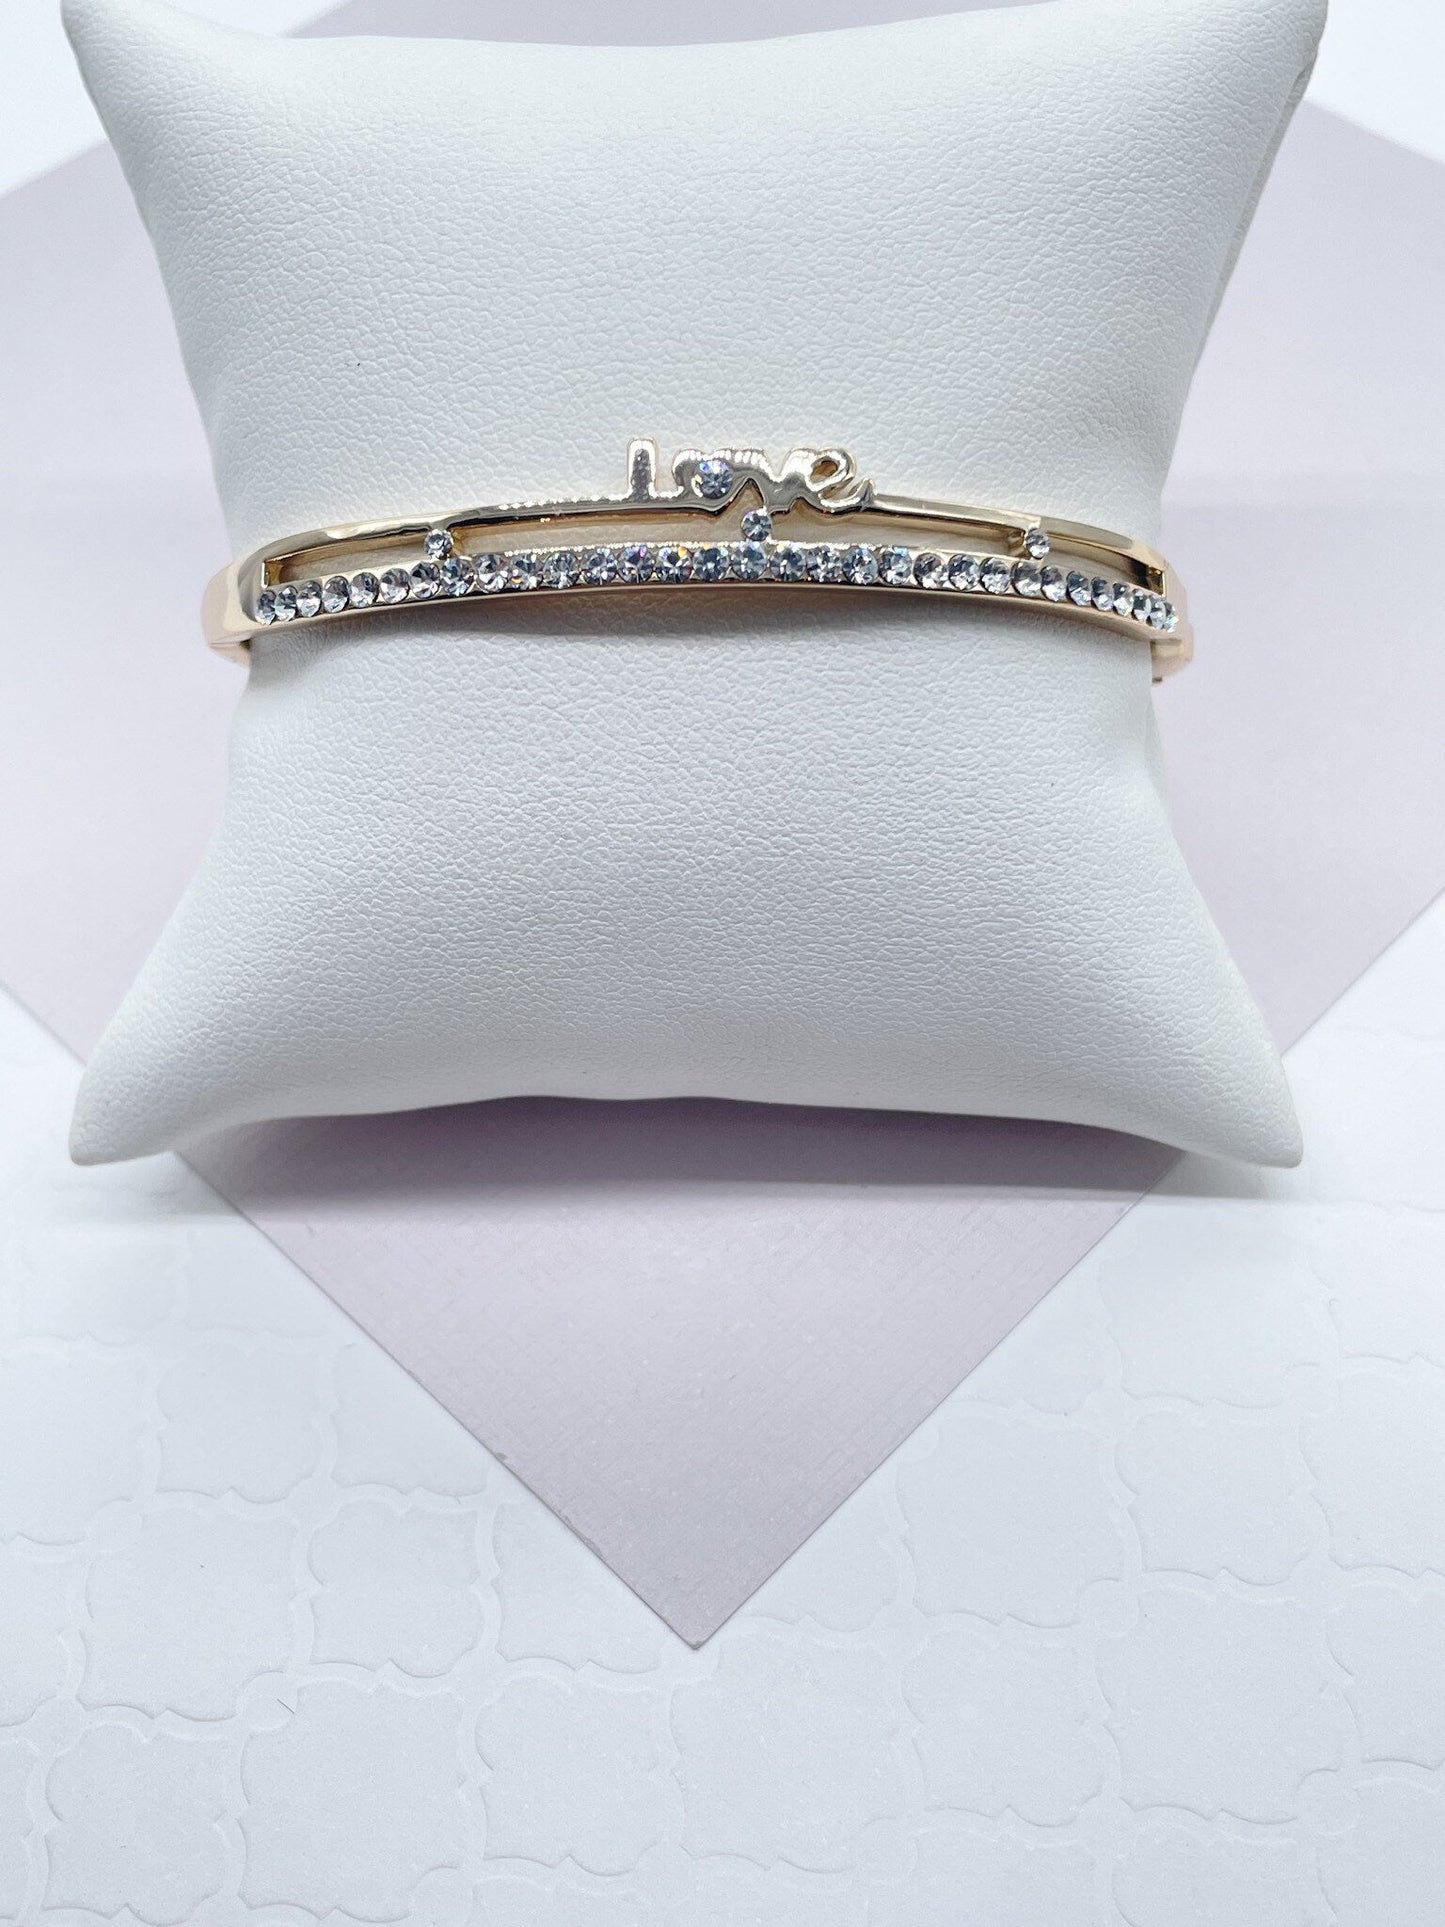 18k Gold Filled Cubic Zirconia Love Bangle Bracelet in Gold, Silver or Rose Gold Gift Her,